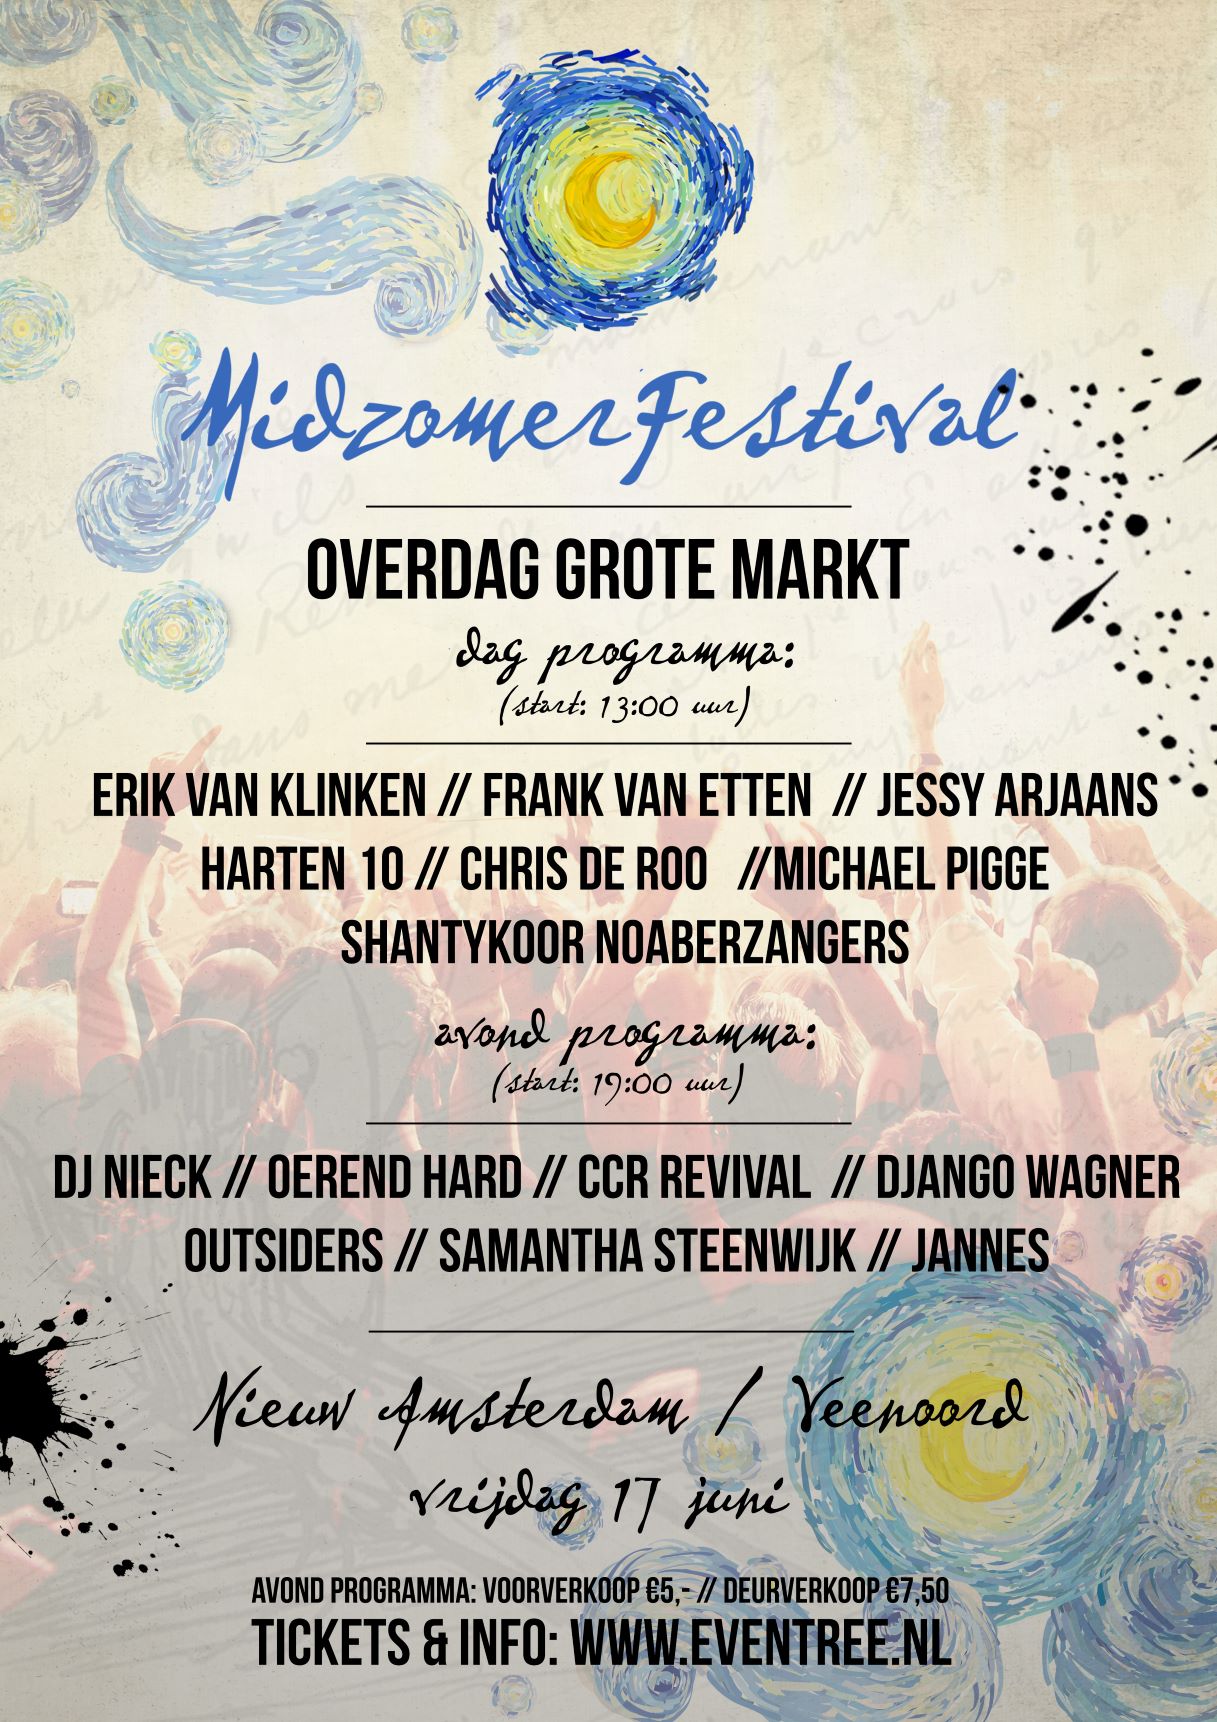 Midzomer Festival Nieuw Amsterdam / Veenoord